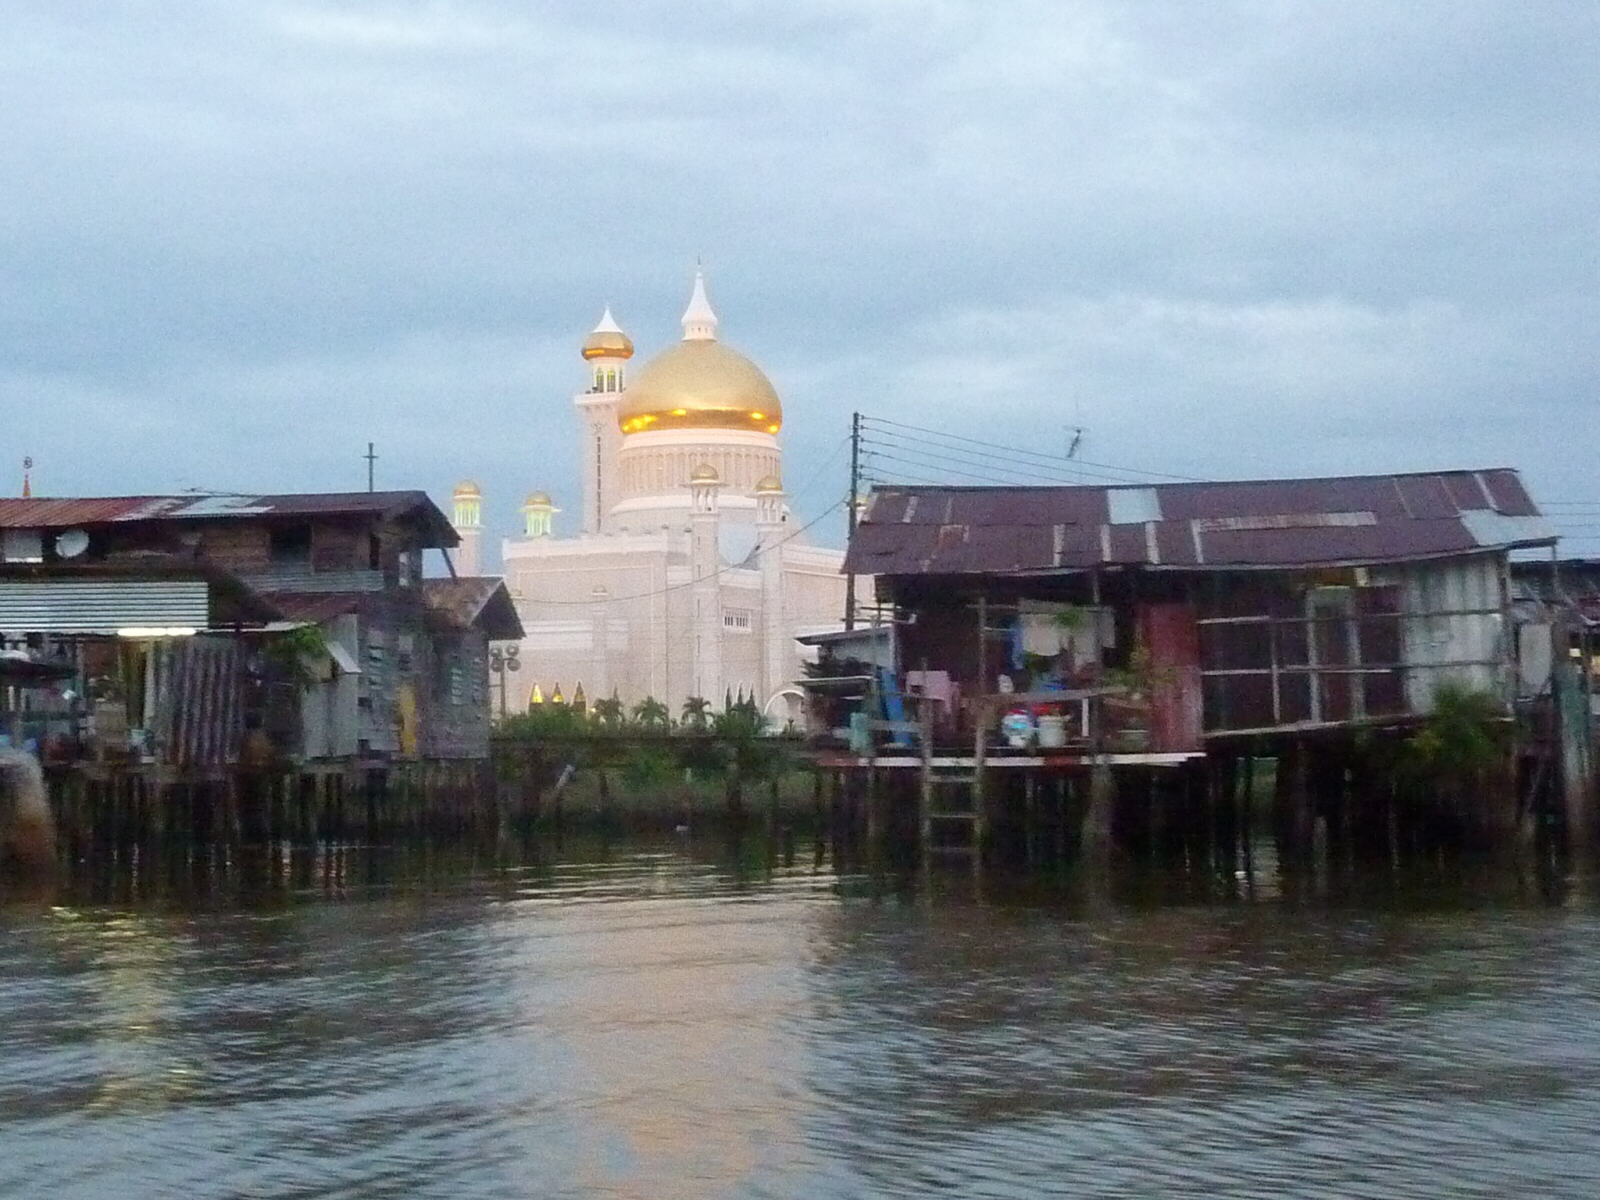 A stilt village and floodlit mosque on the Brunei river